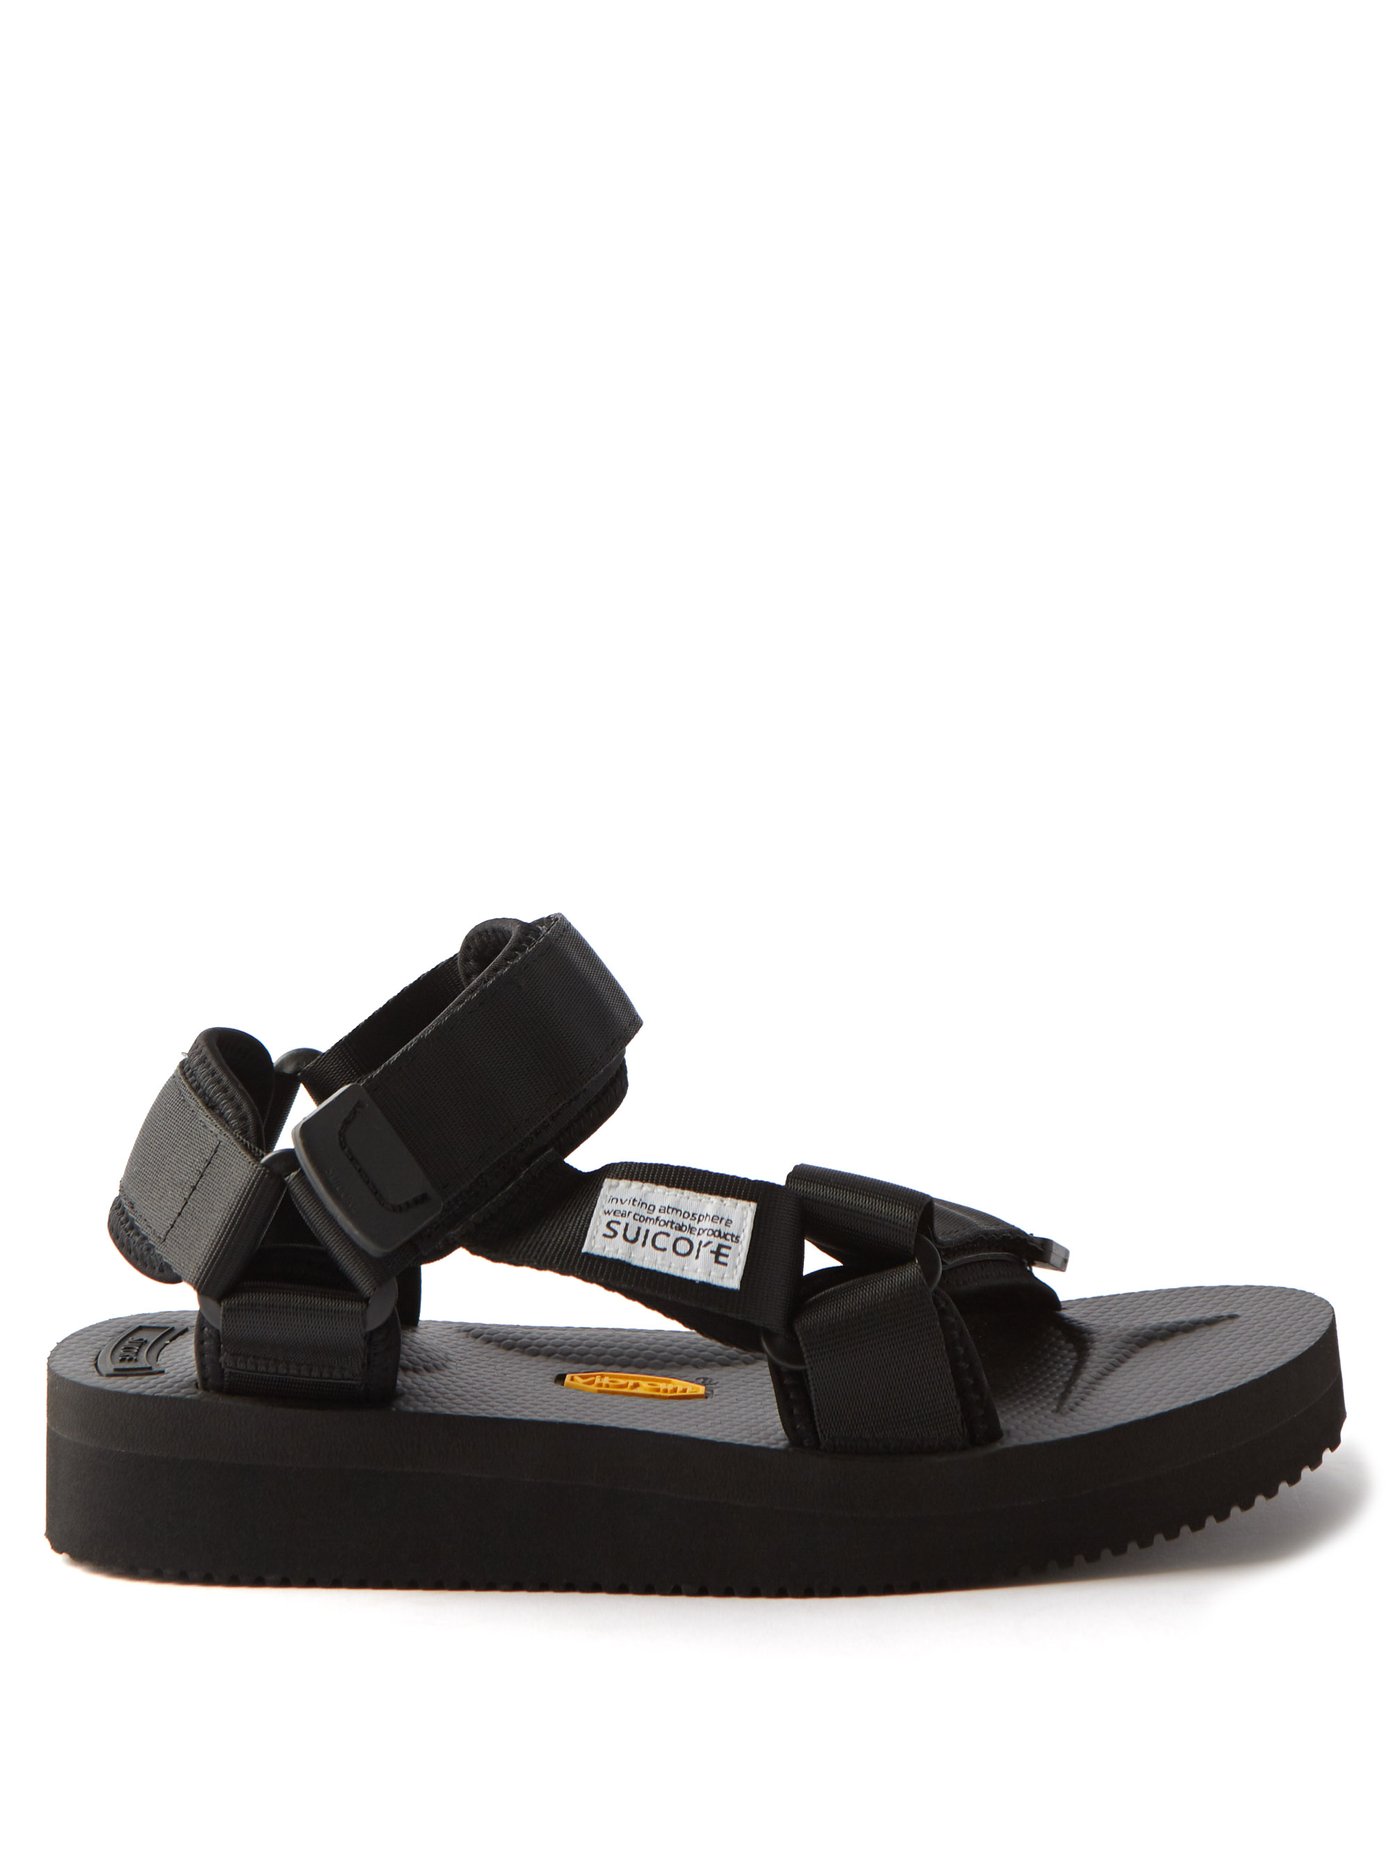 DEPA-V2 velcro-strap sandals | Suicoke 